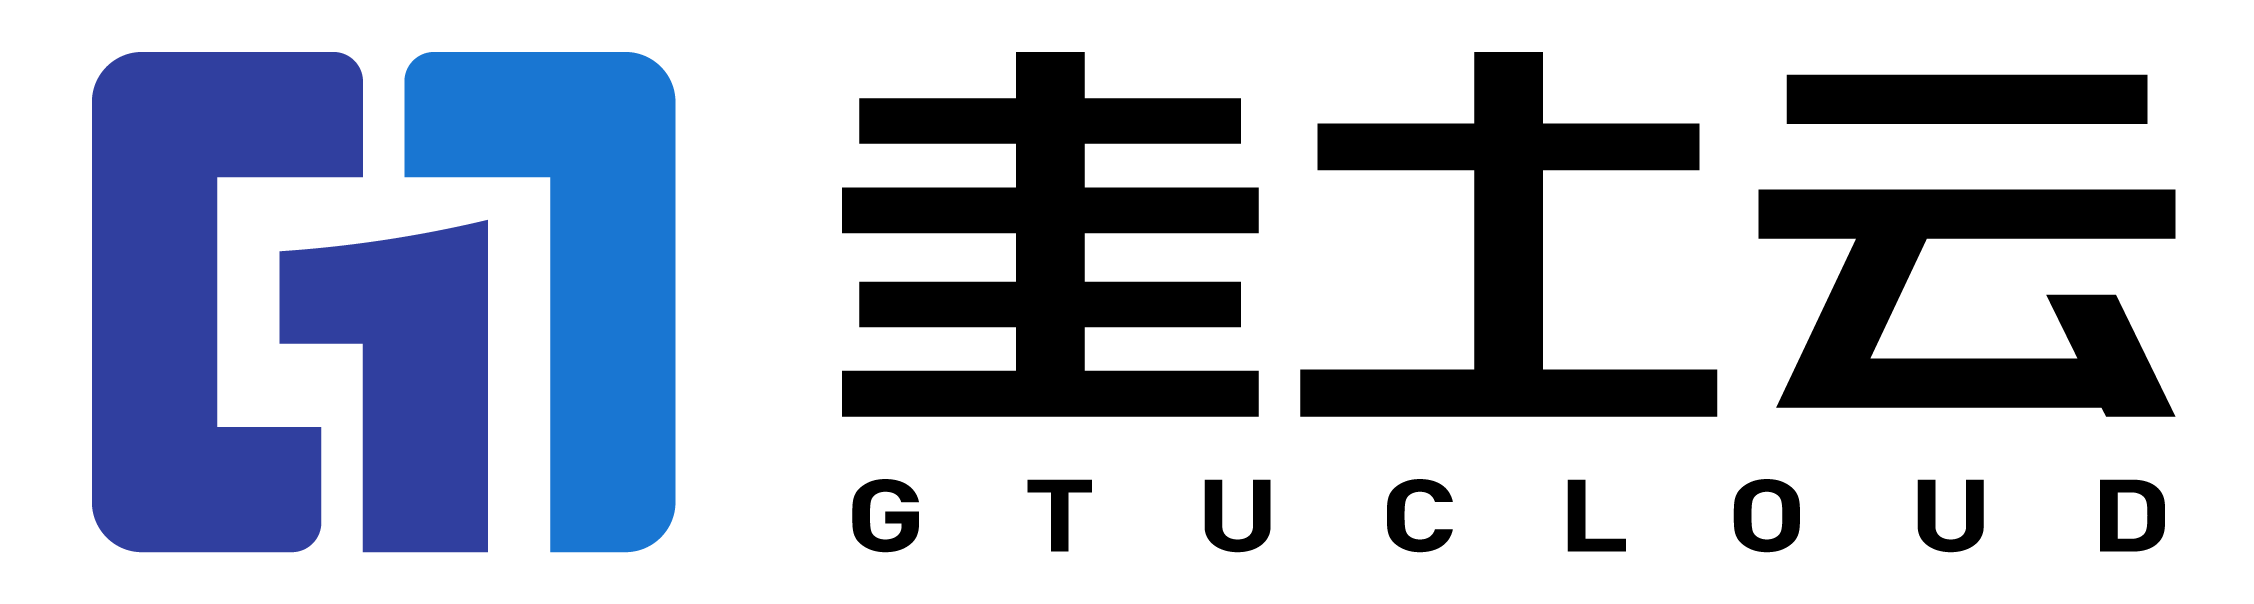 中英文logo